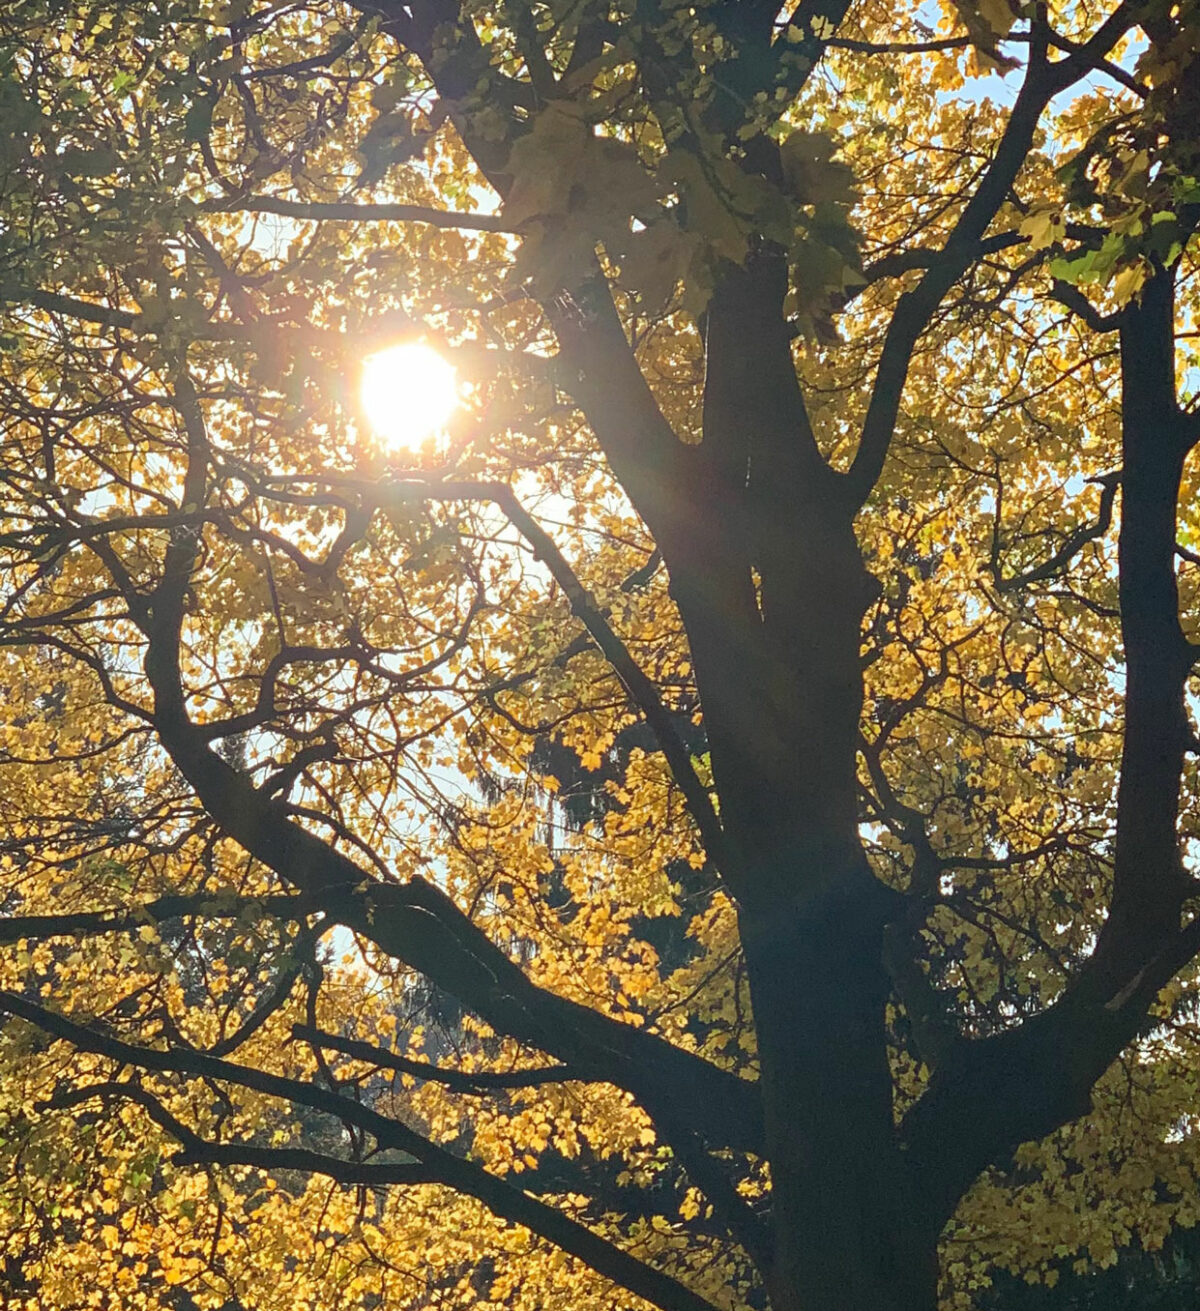 The sun poking through tree branches.